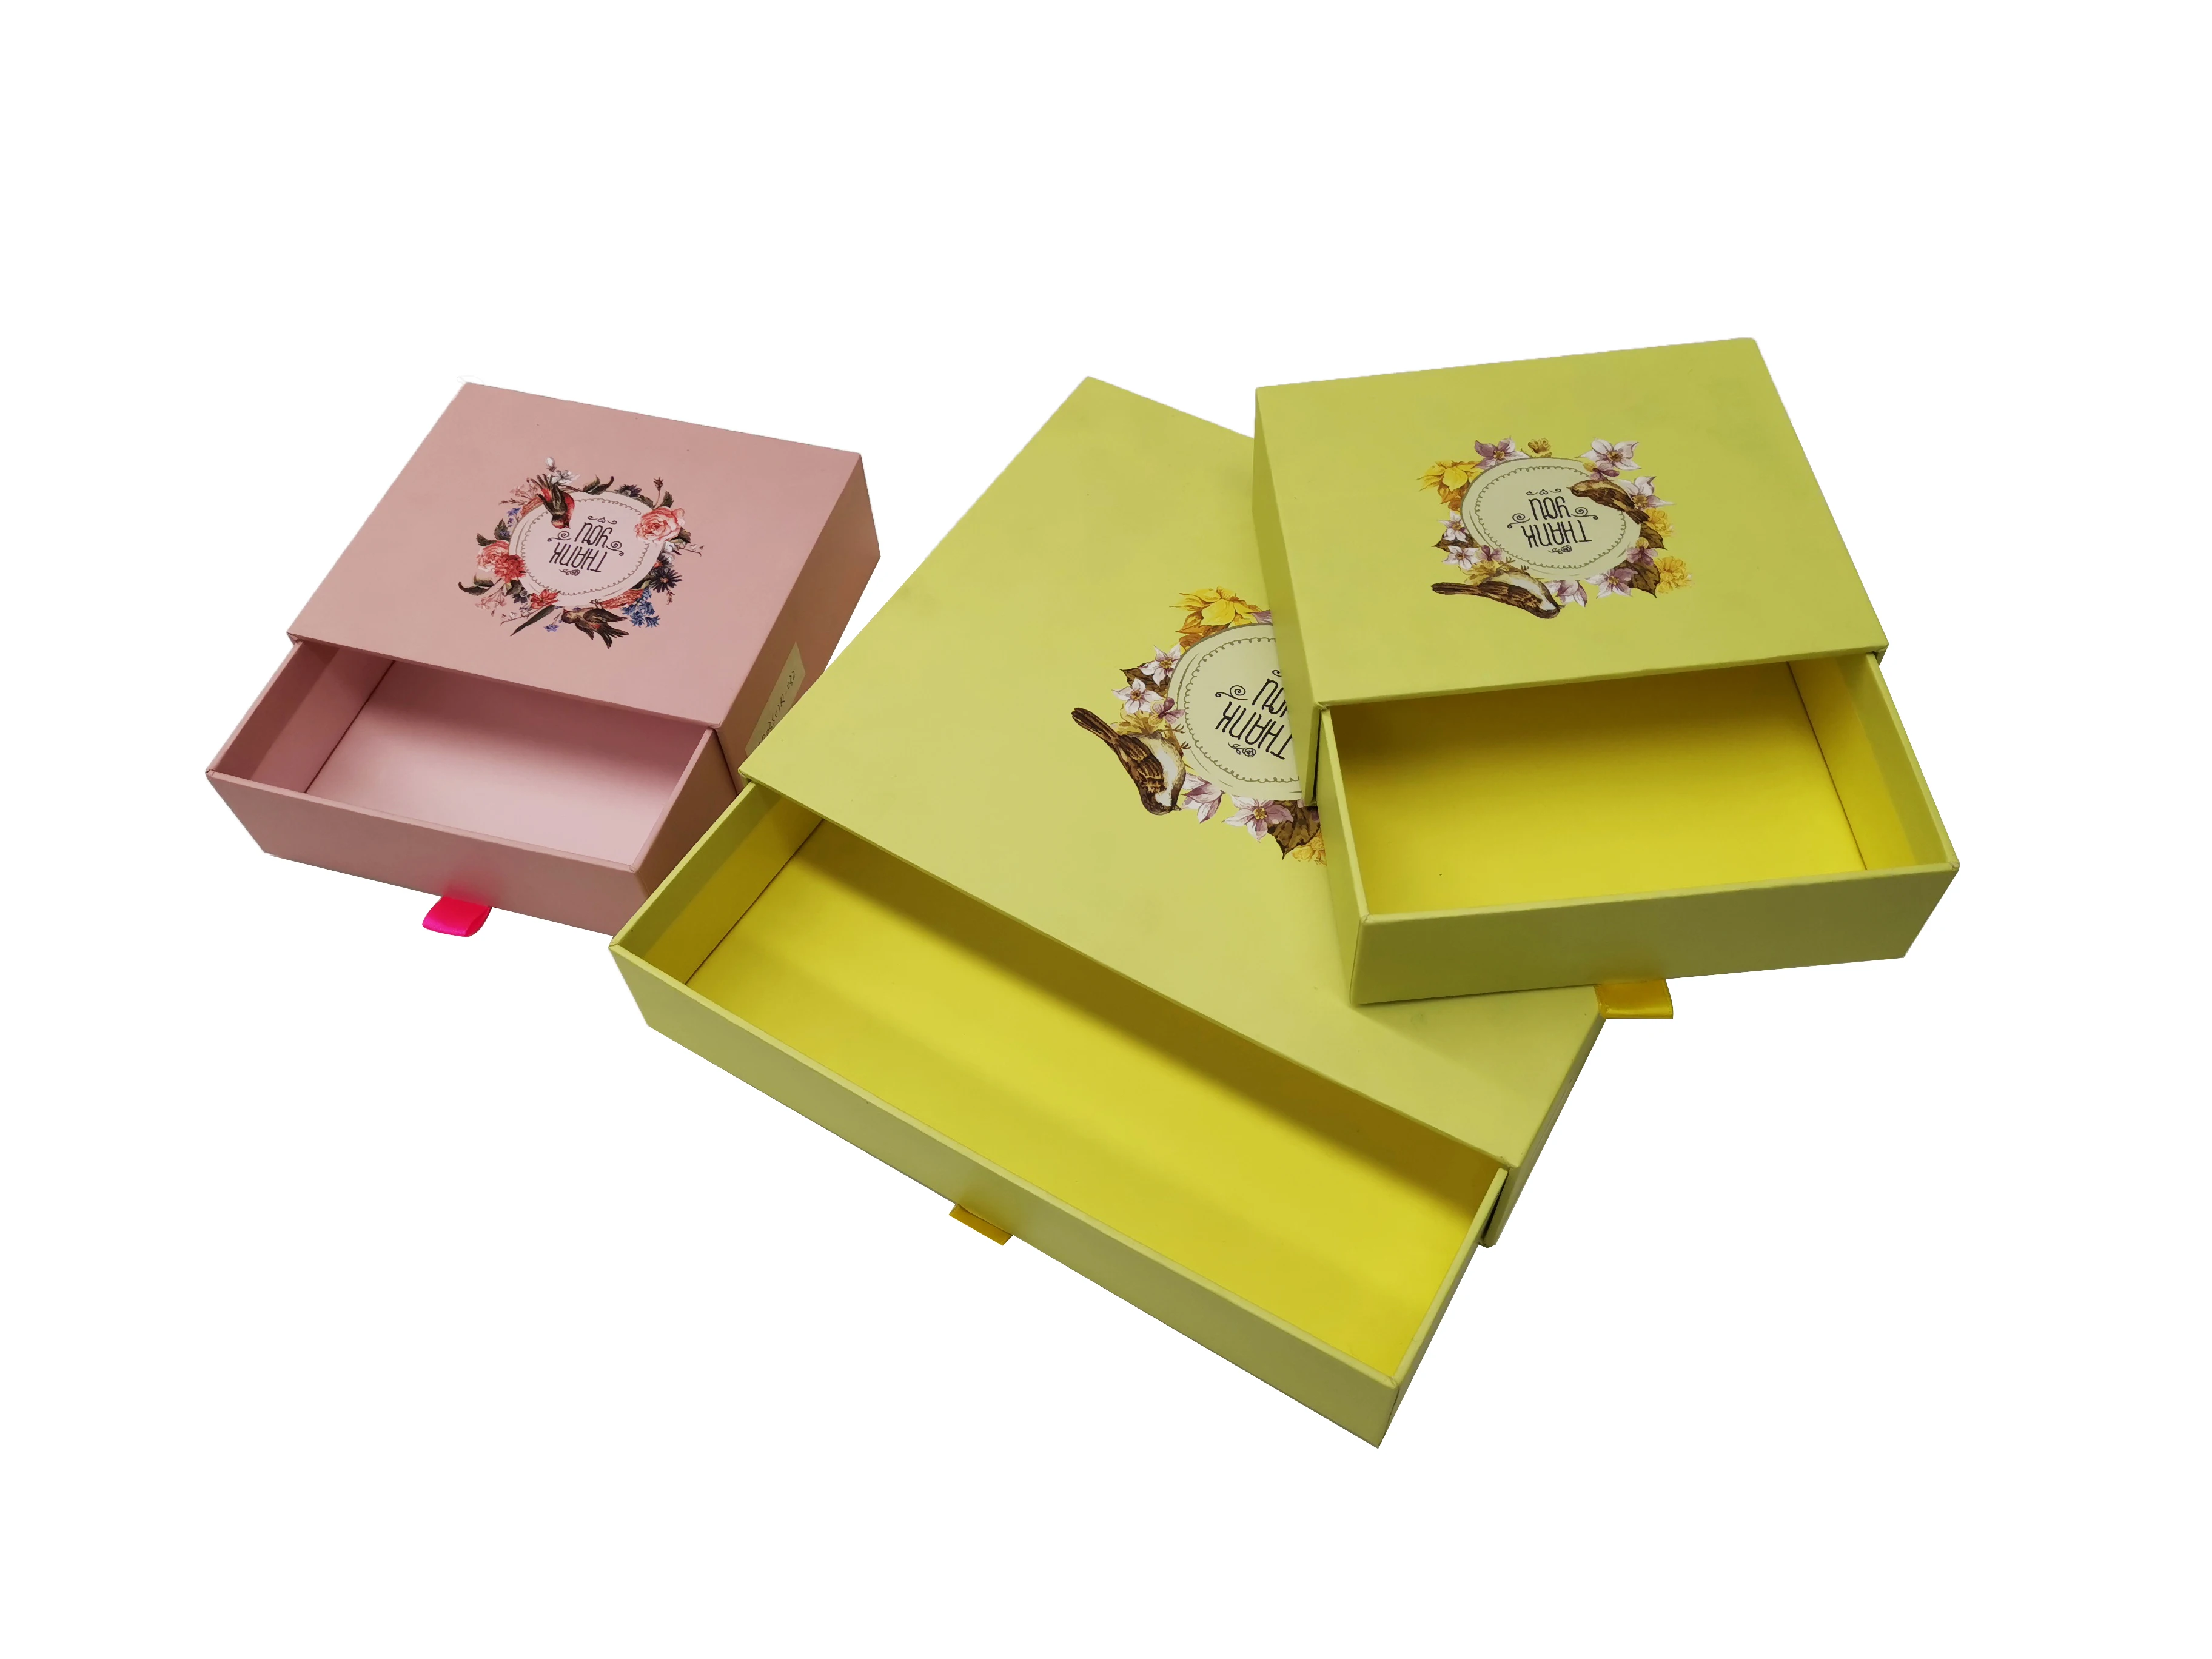 Yellow Gift Box Cardboard Drawer Packaging Box With Custom Logo